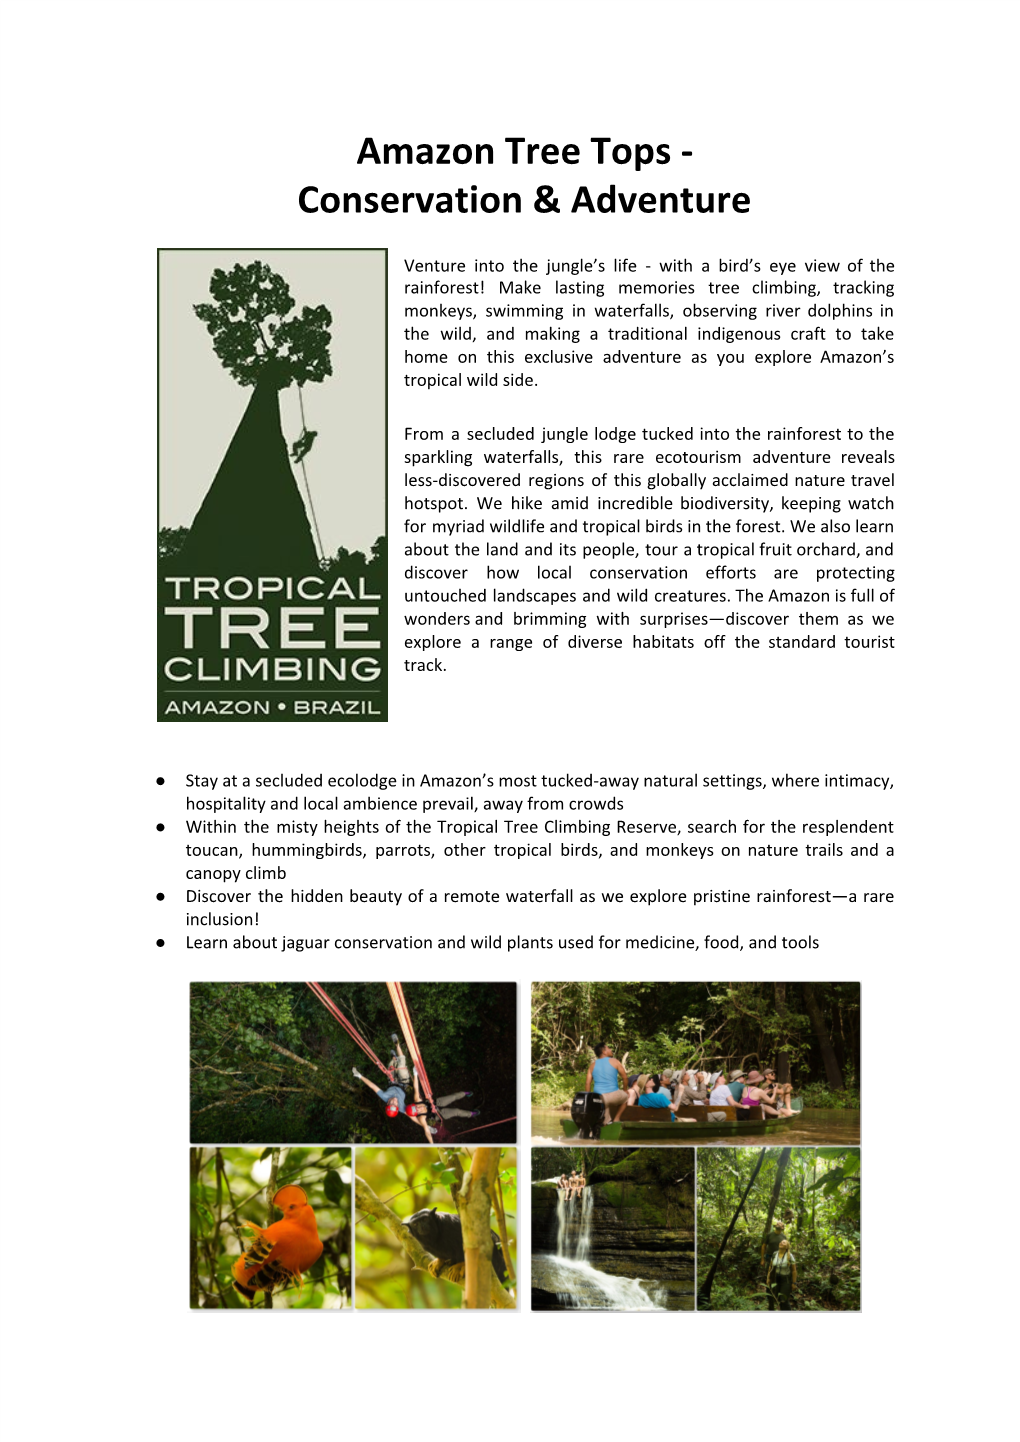 Amazon Tree Tops - Conservation & Adventure